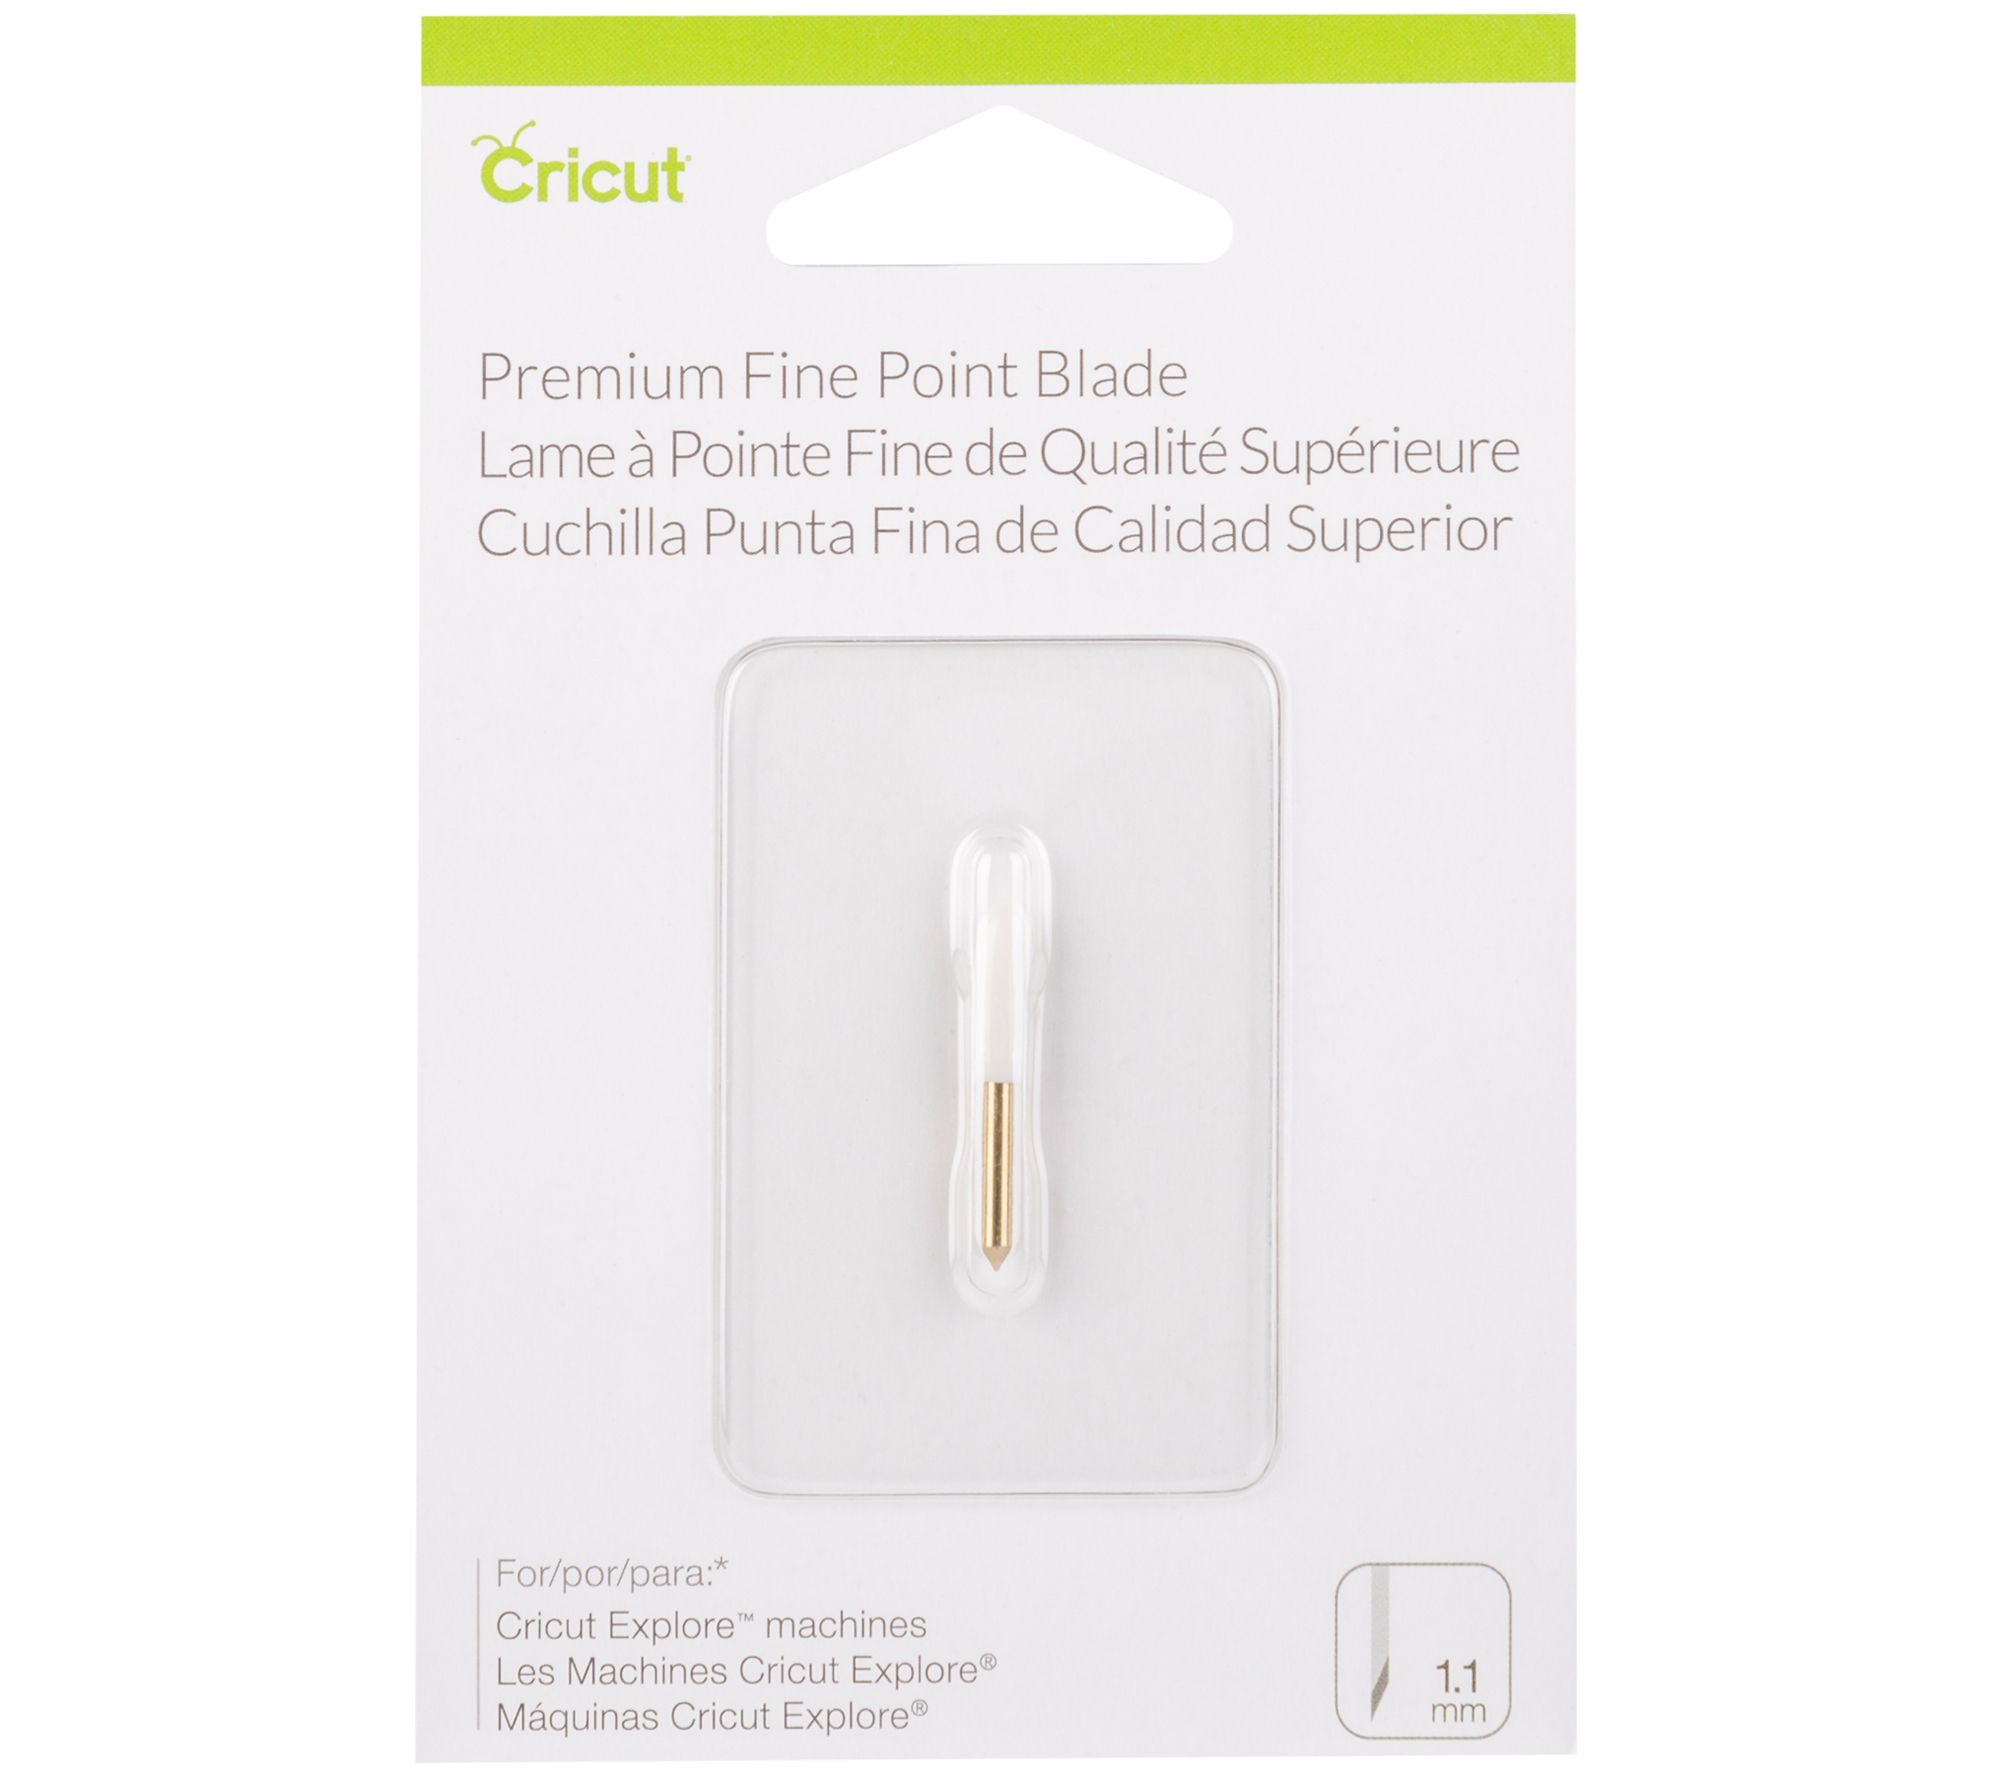 Cricut Maker 3 Premium Fine Point Blade - Gold Color Long Lasting